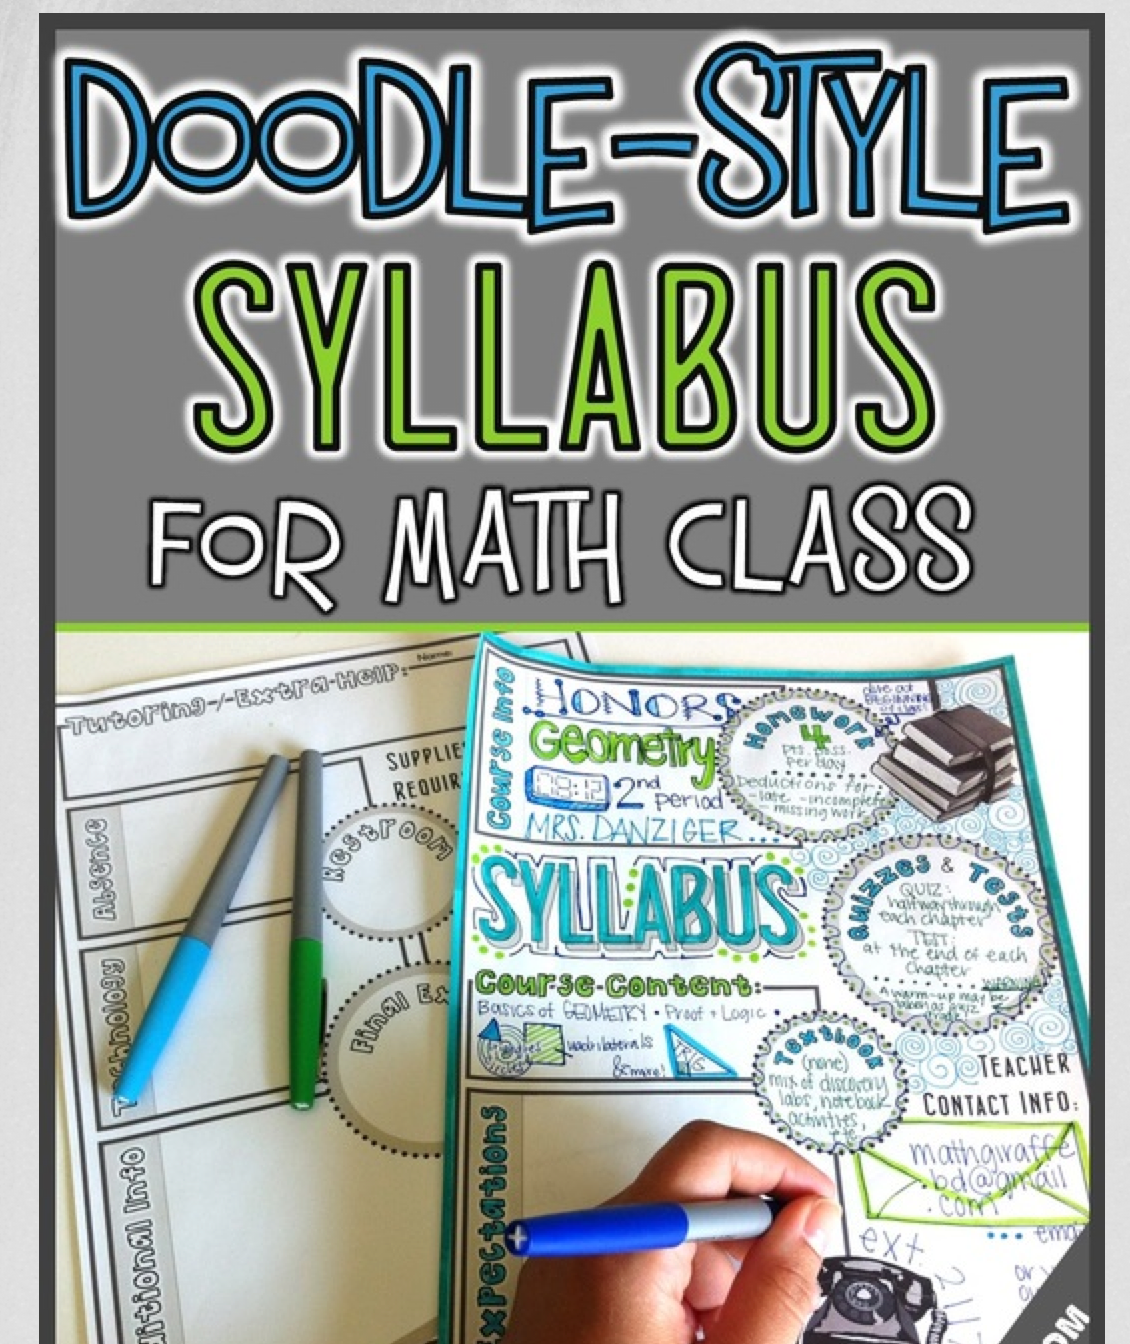 Doodle style syllabus